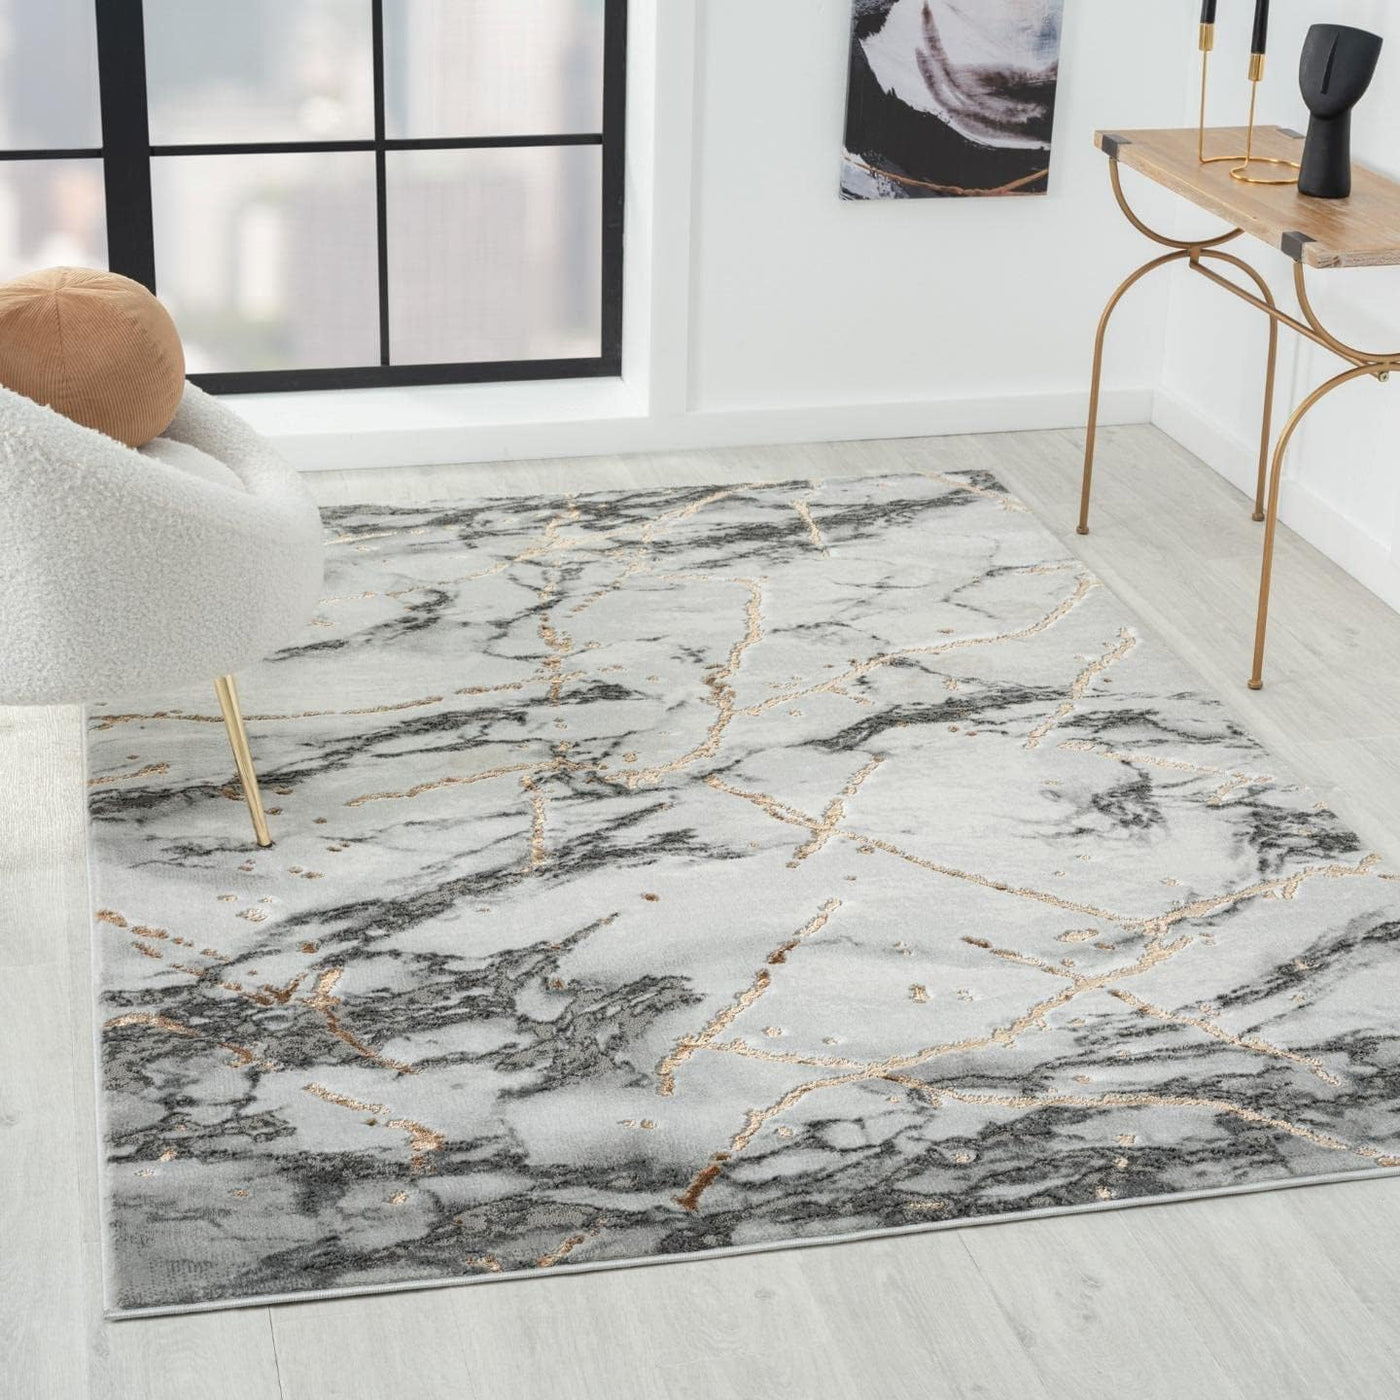 Ishro Home Premium Italian Carpets for Living Room/Bedroom/Home, Waterproof and Anti-Skid